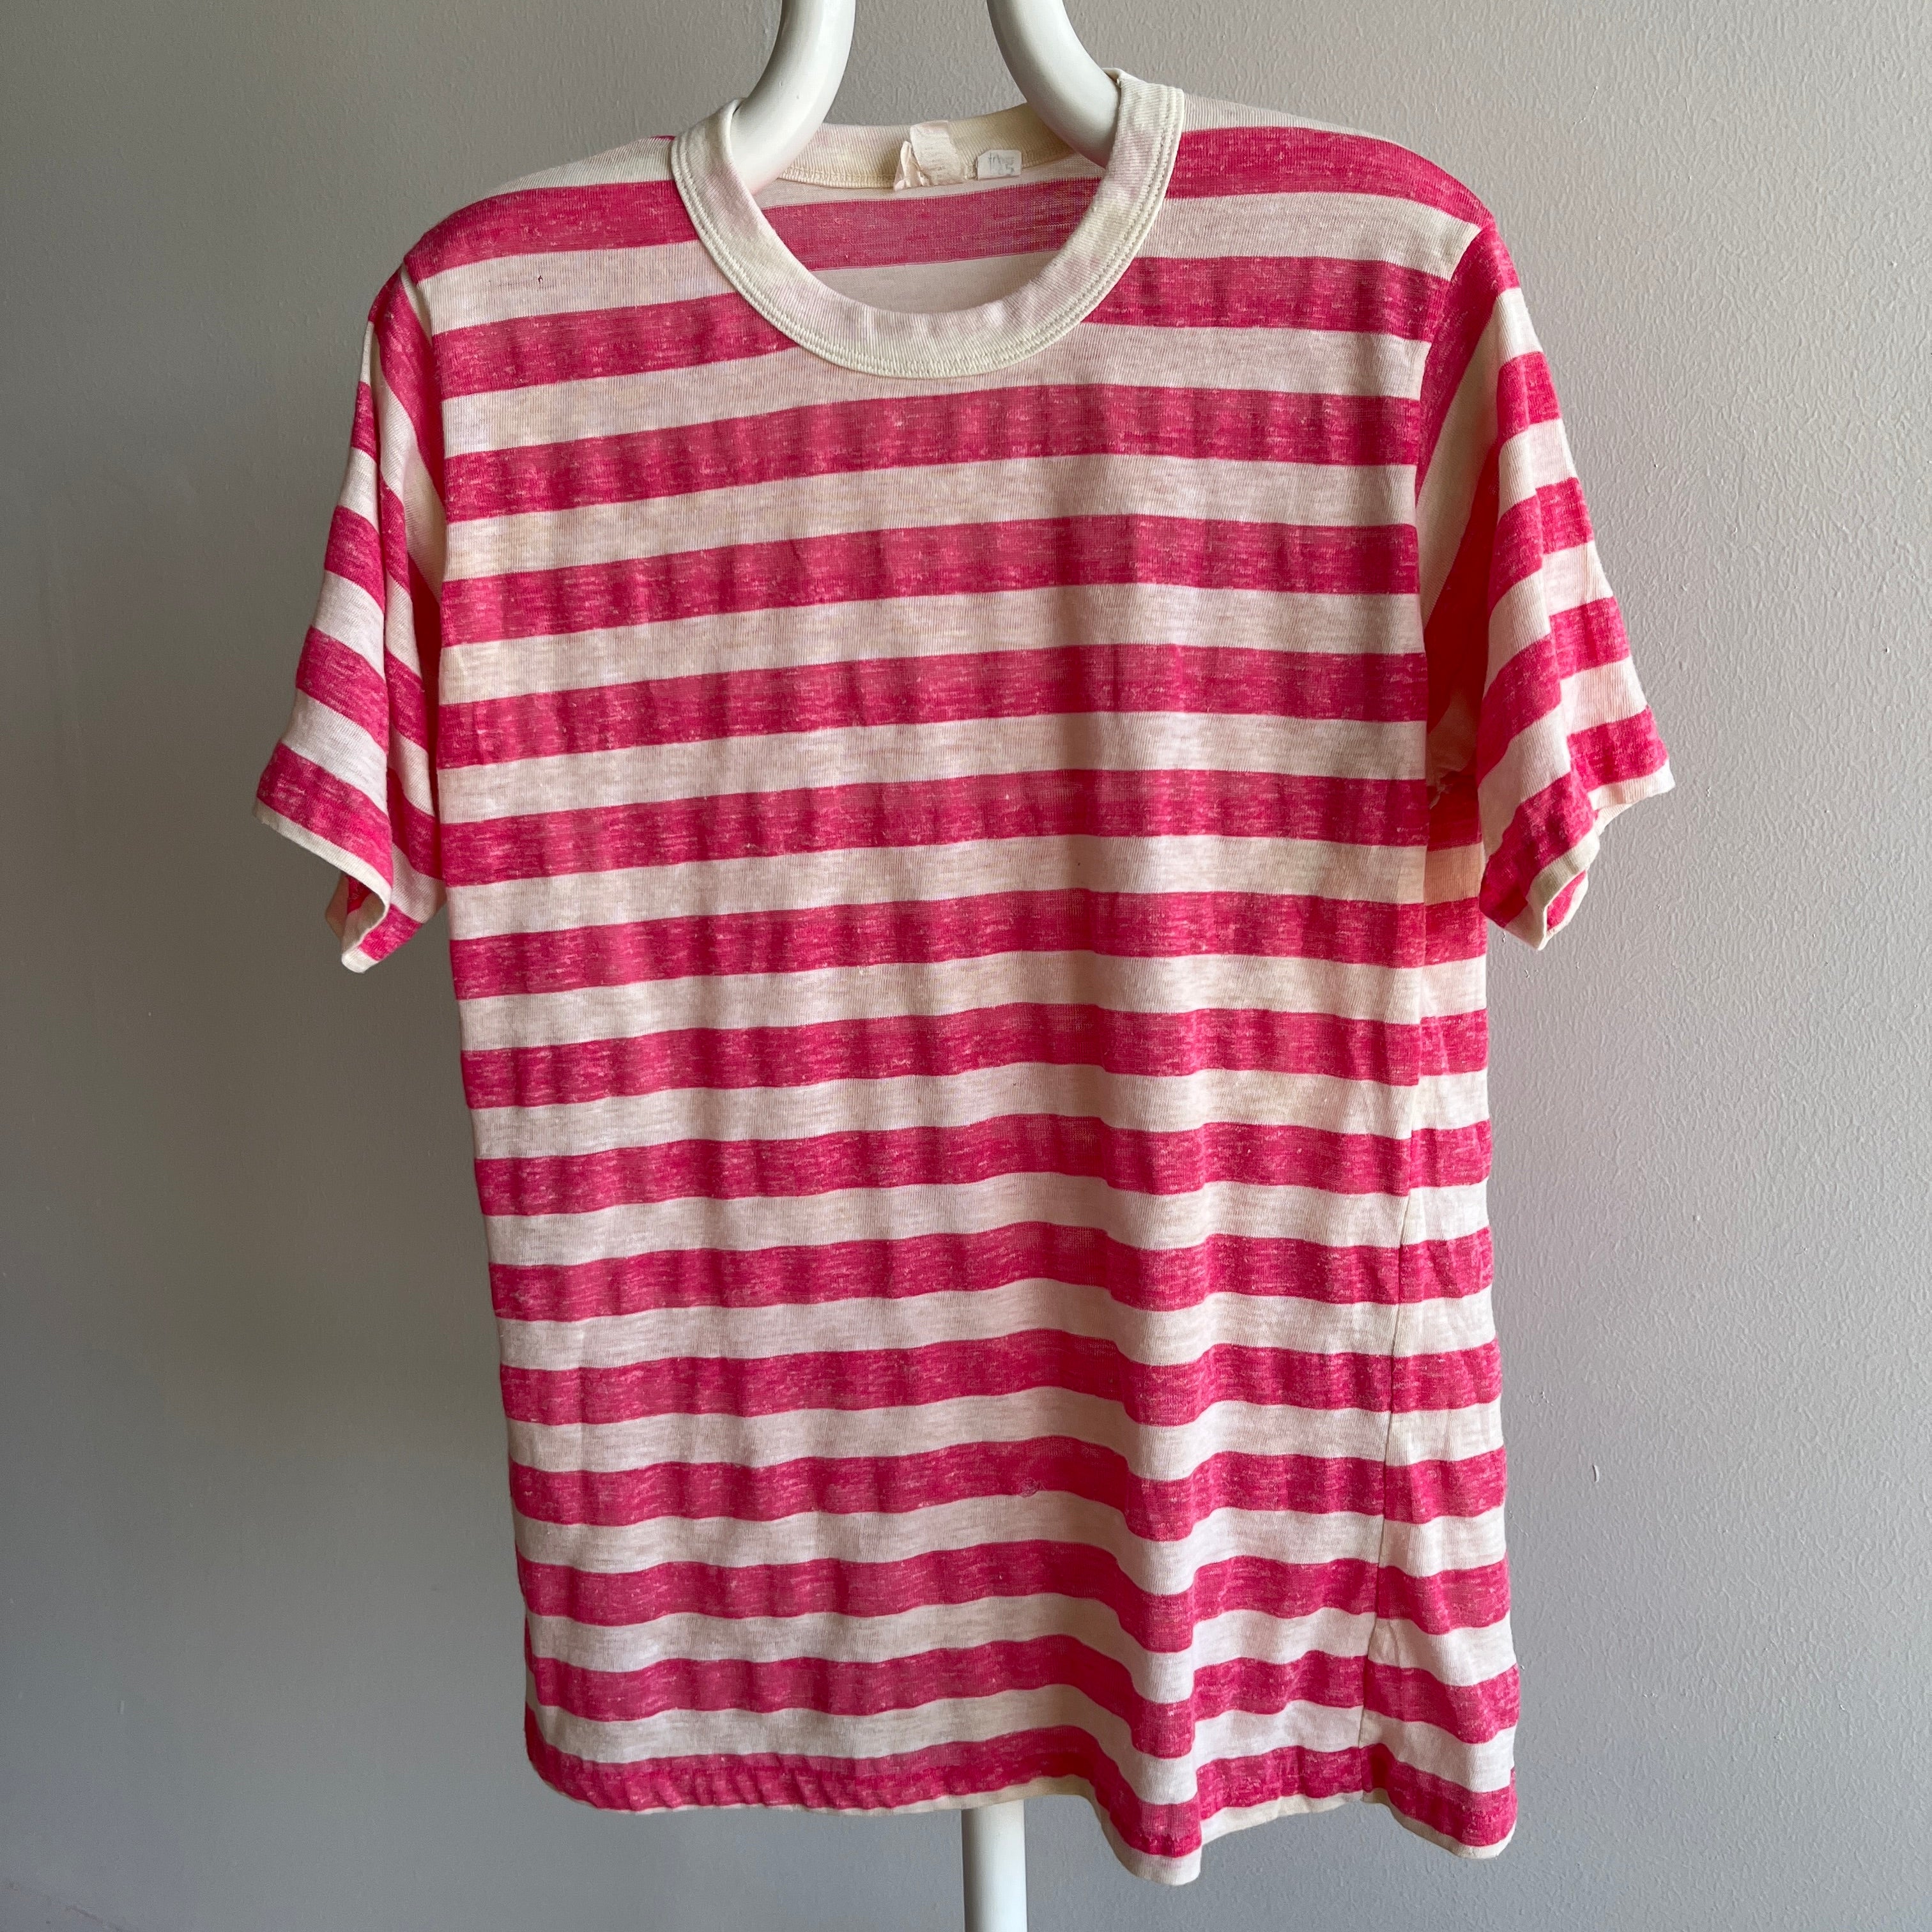 1970/80s Hot Pink Striped T-Shirt - !!!!